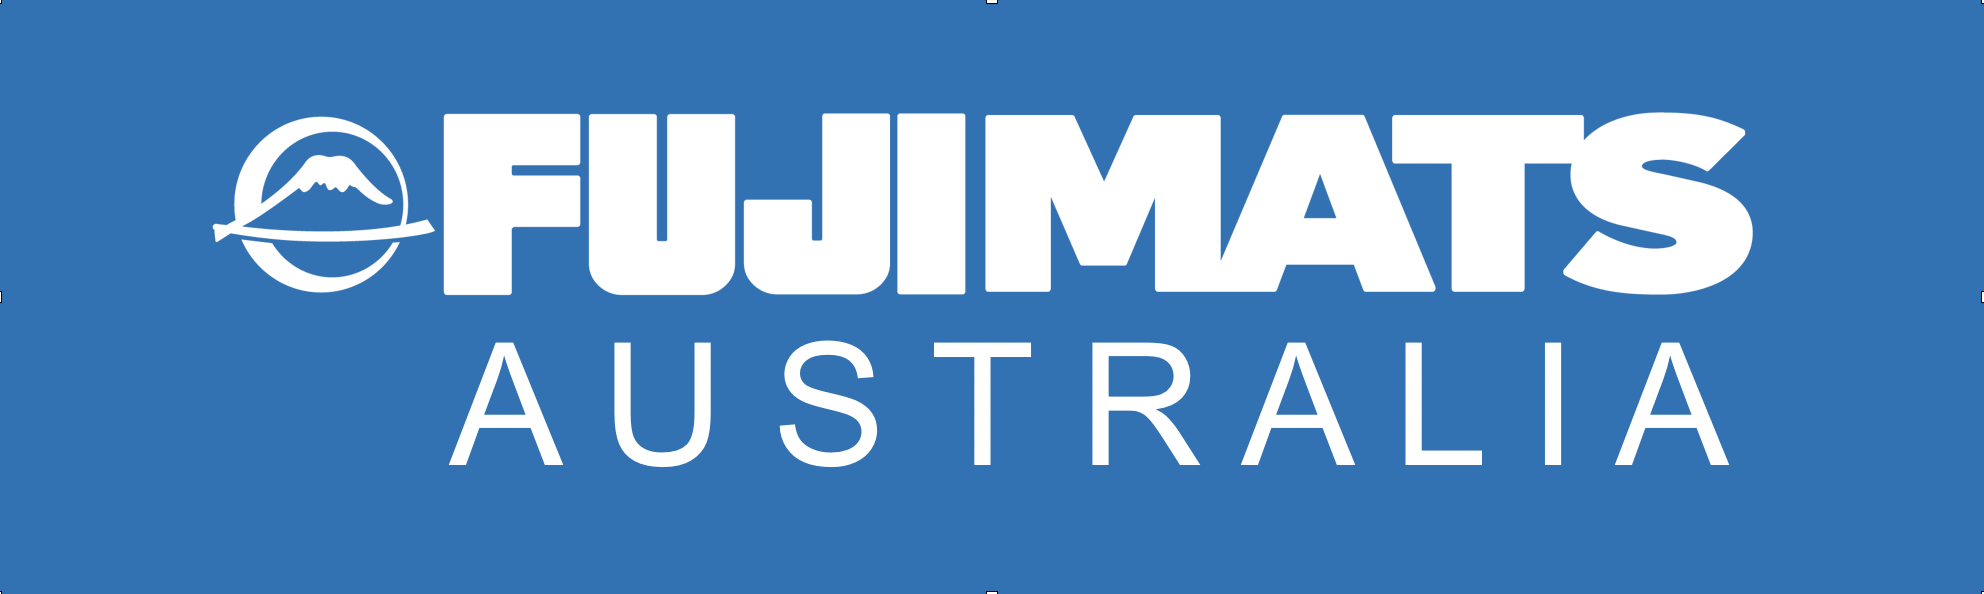 Fuji Mats Australia logo